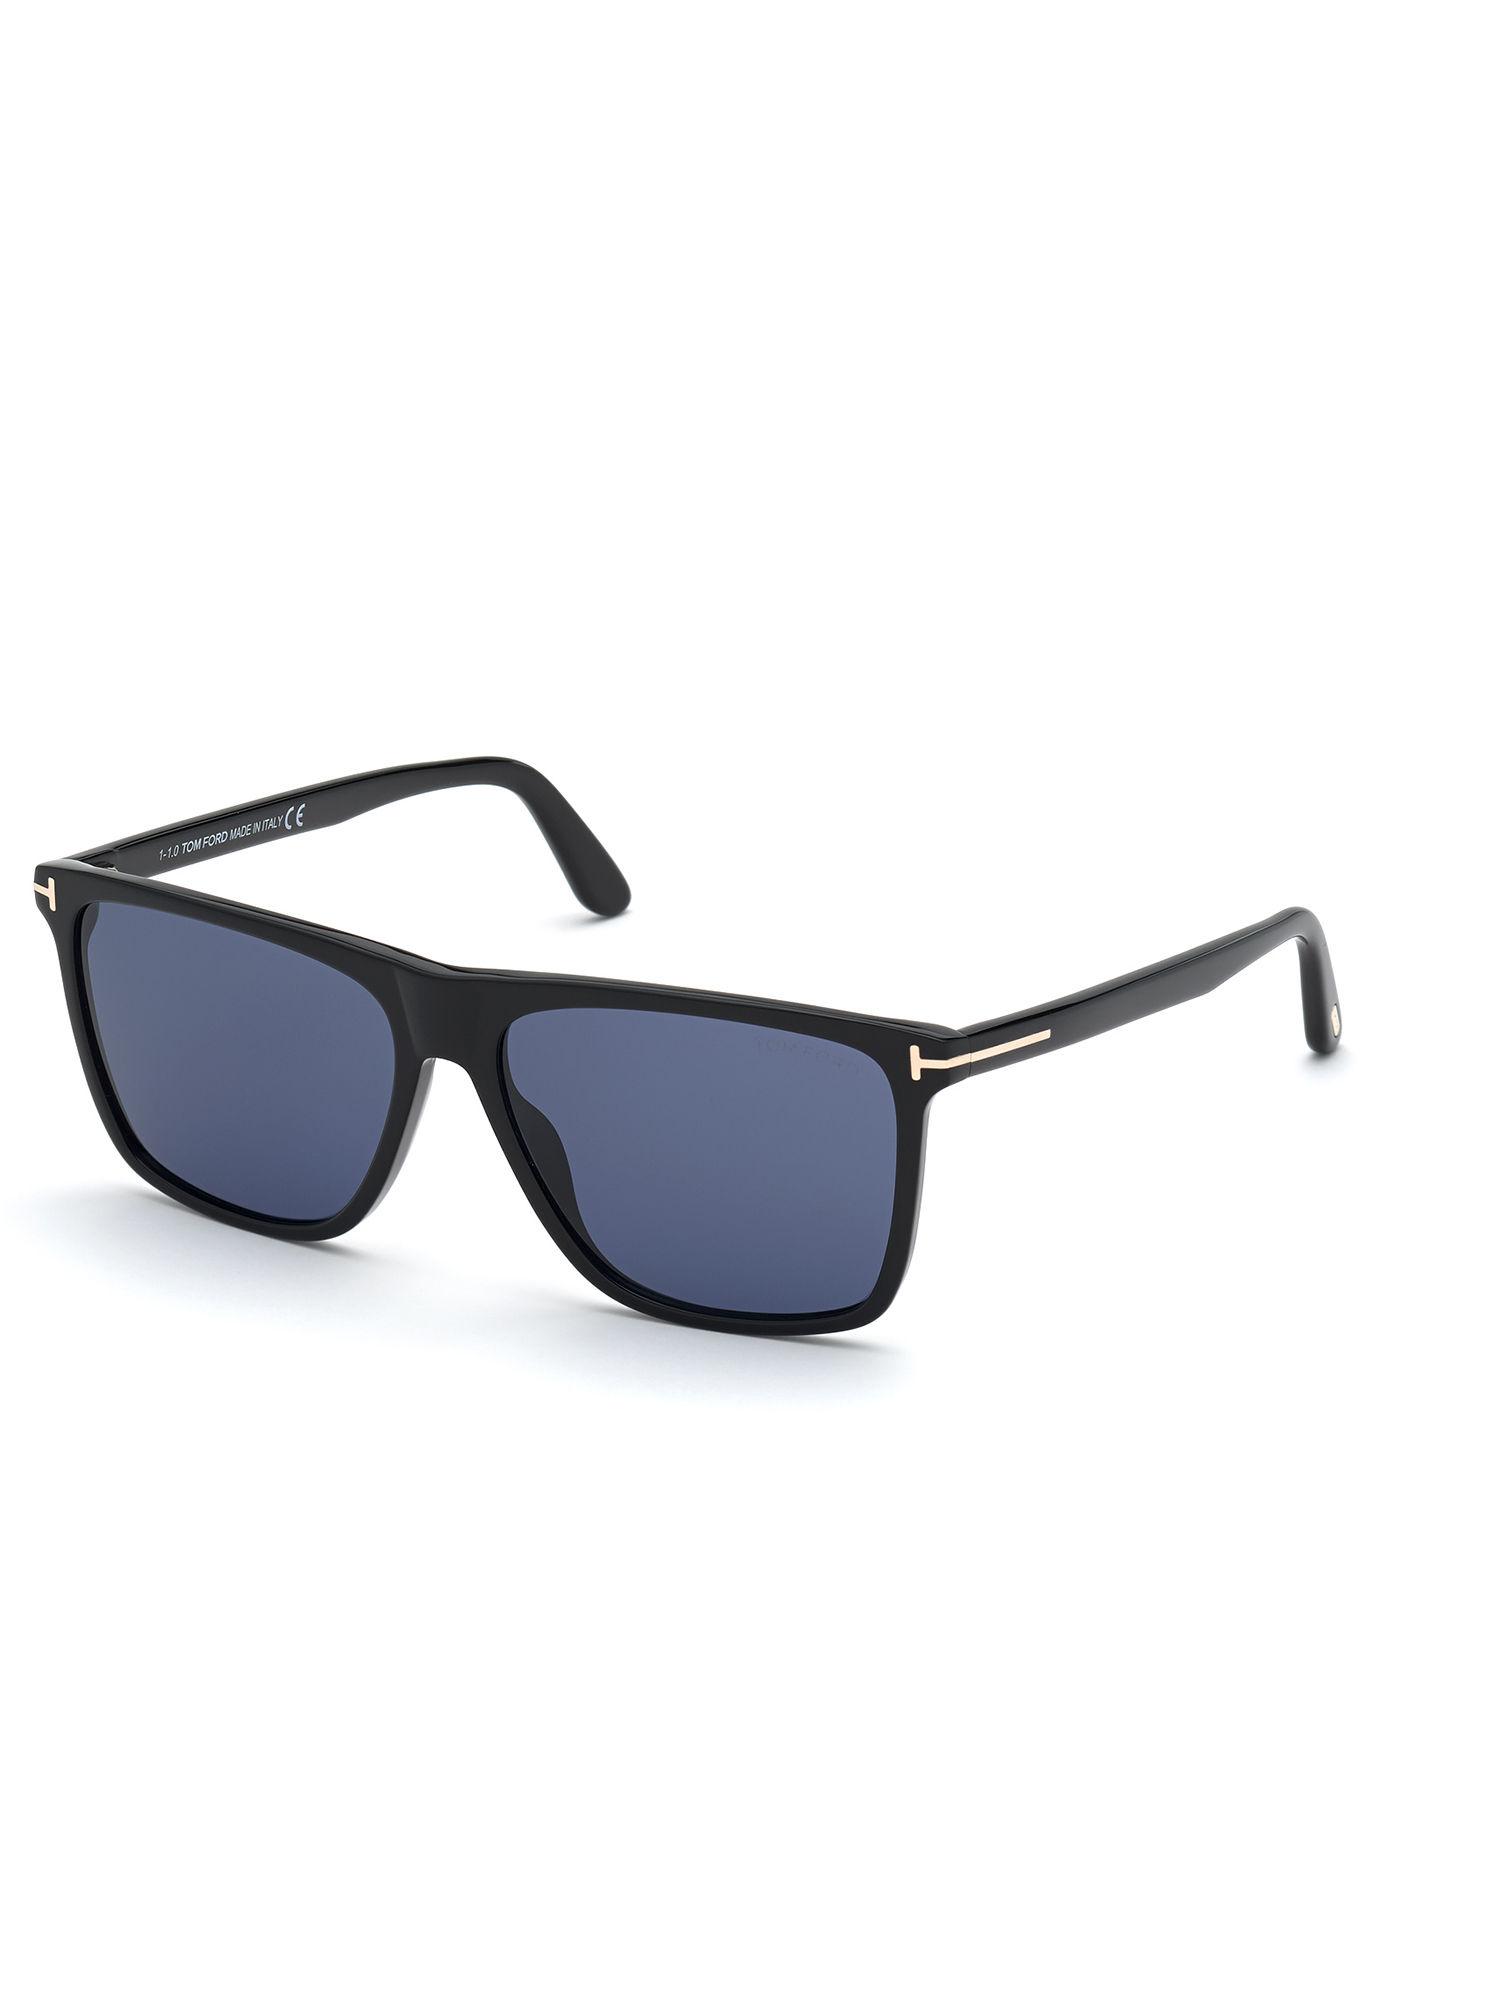 black plastic sunglasses ft0832 57 01v